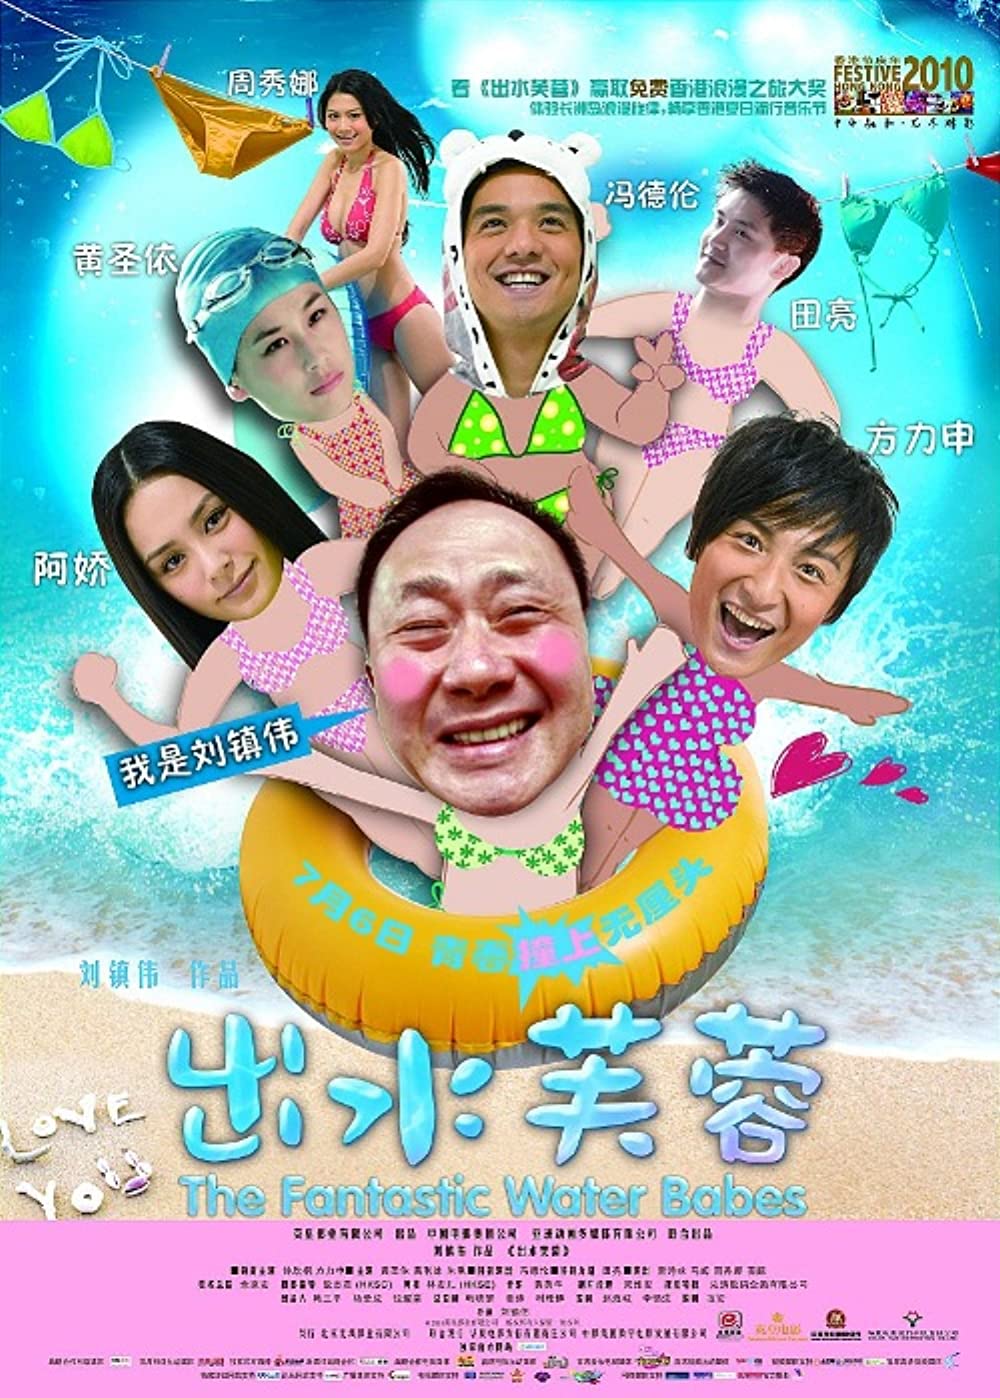 Download Chut sui fu yung Movie | Chut Sui Fu Yung Hd, Dvd